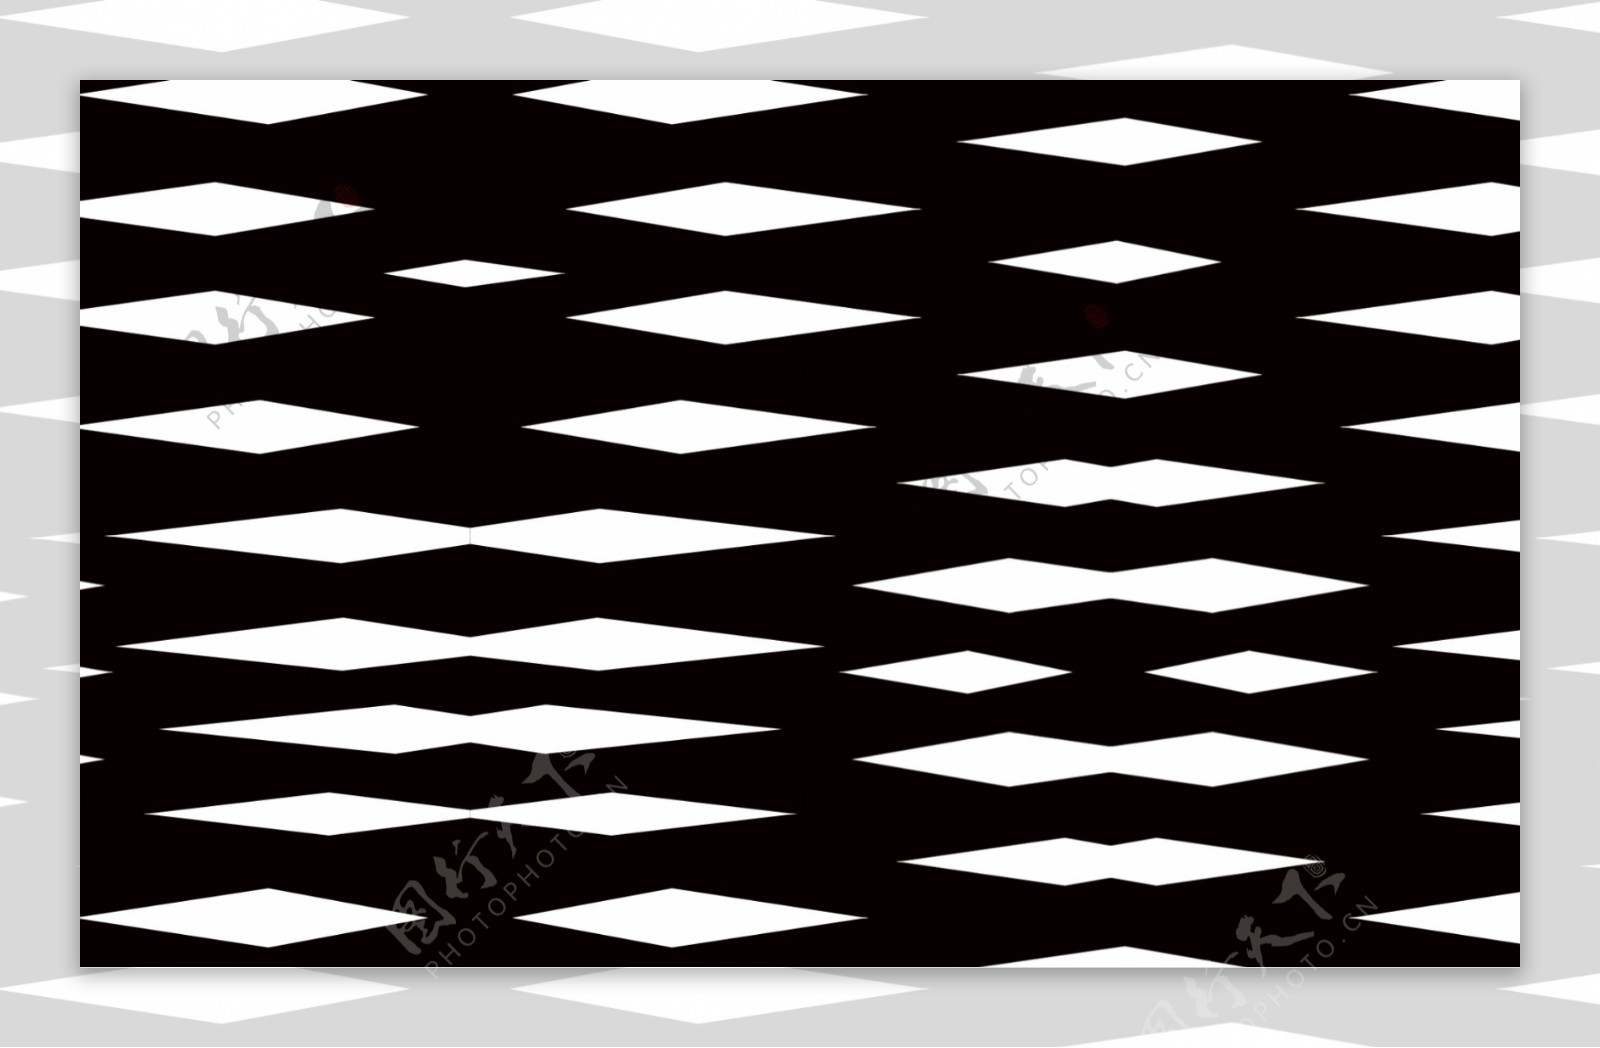 【3D贴图】三角形黑白渐变贴图-3d材质贴图下载_贴图素材_3d贴图网 - 建E网3dmax材质库